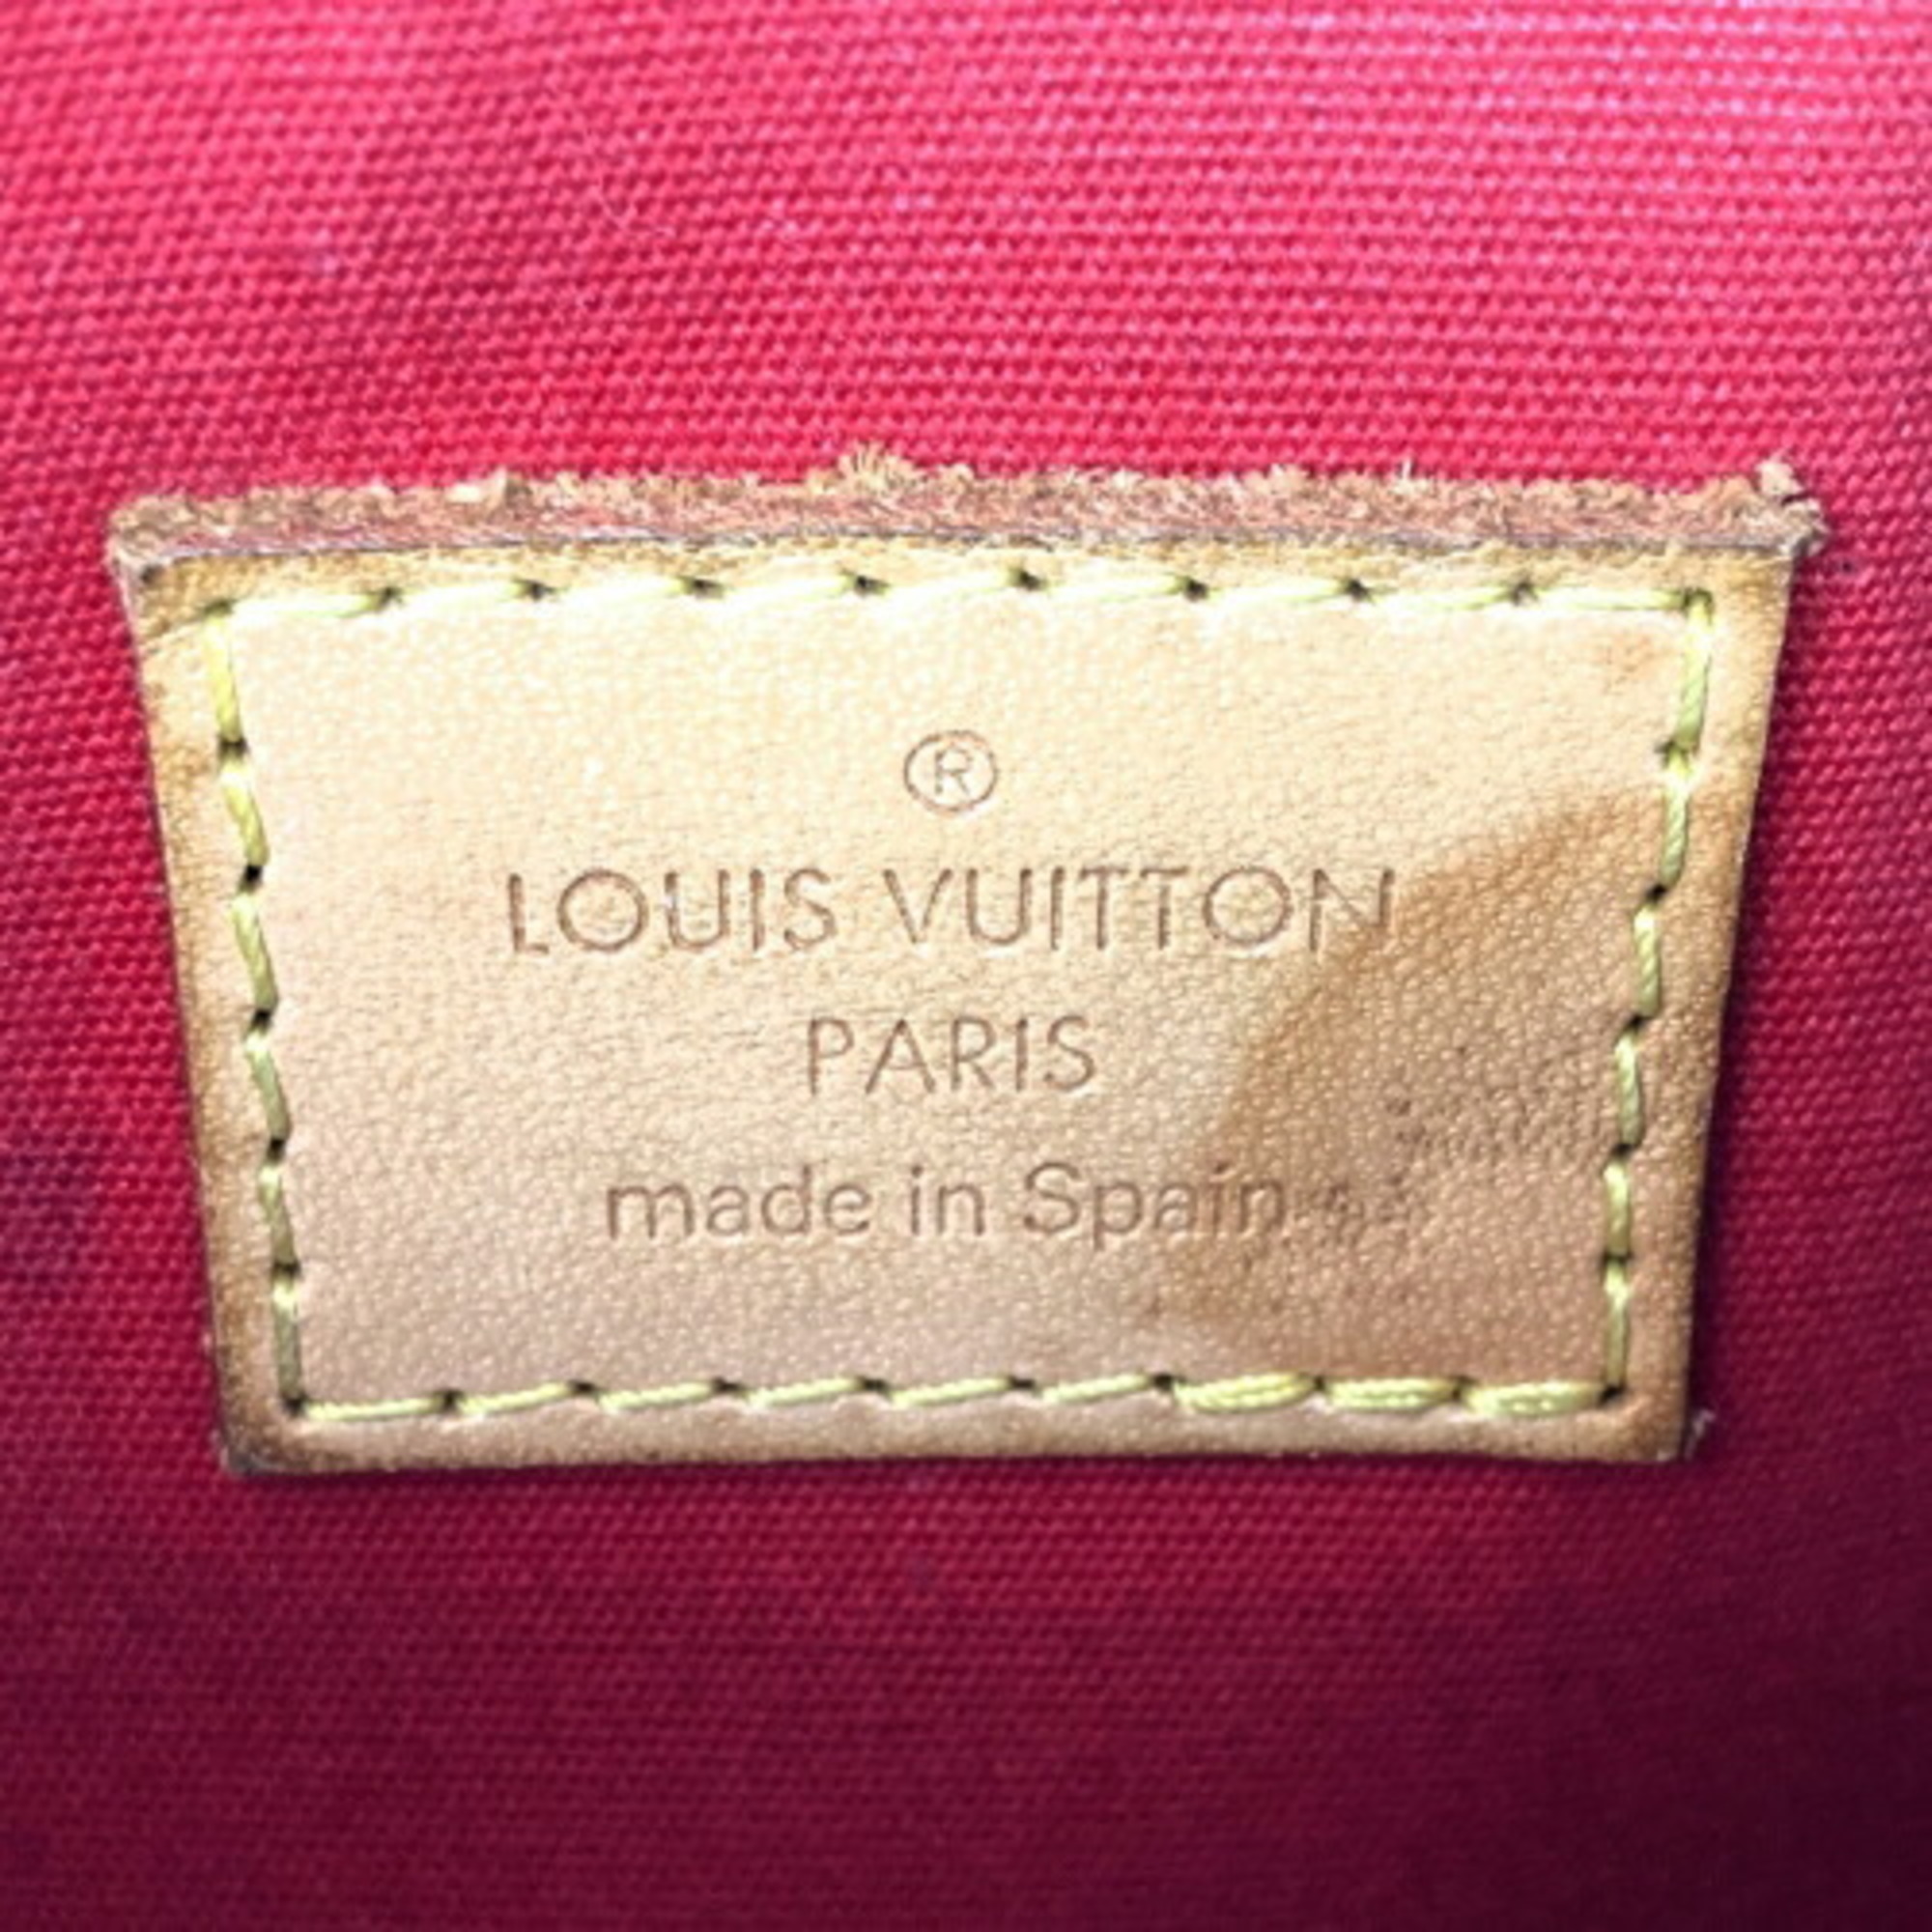 LOUIS VUITTON Mallory Square Vernis Shoulder Bag Handbag Red Women's M91295 USED ITWF52NJOT7R